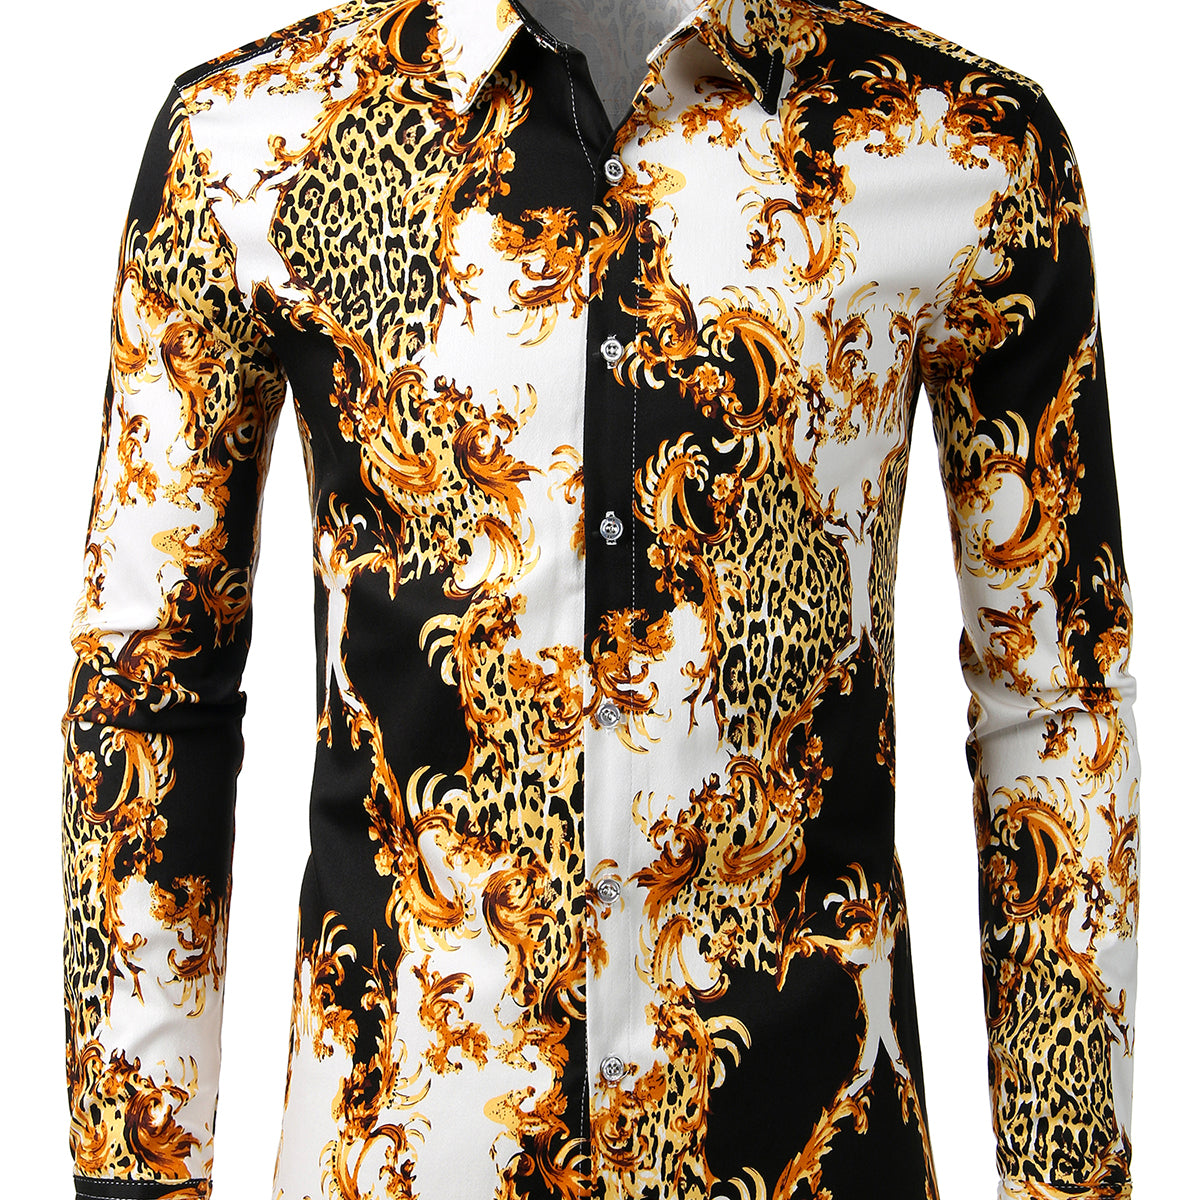 Men's Vintage Baroque Leopard Floral Casual Retro Long Sleeve Cotton Regular Fit Dress Shirt